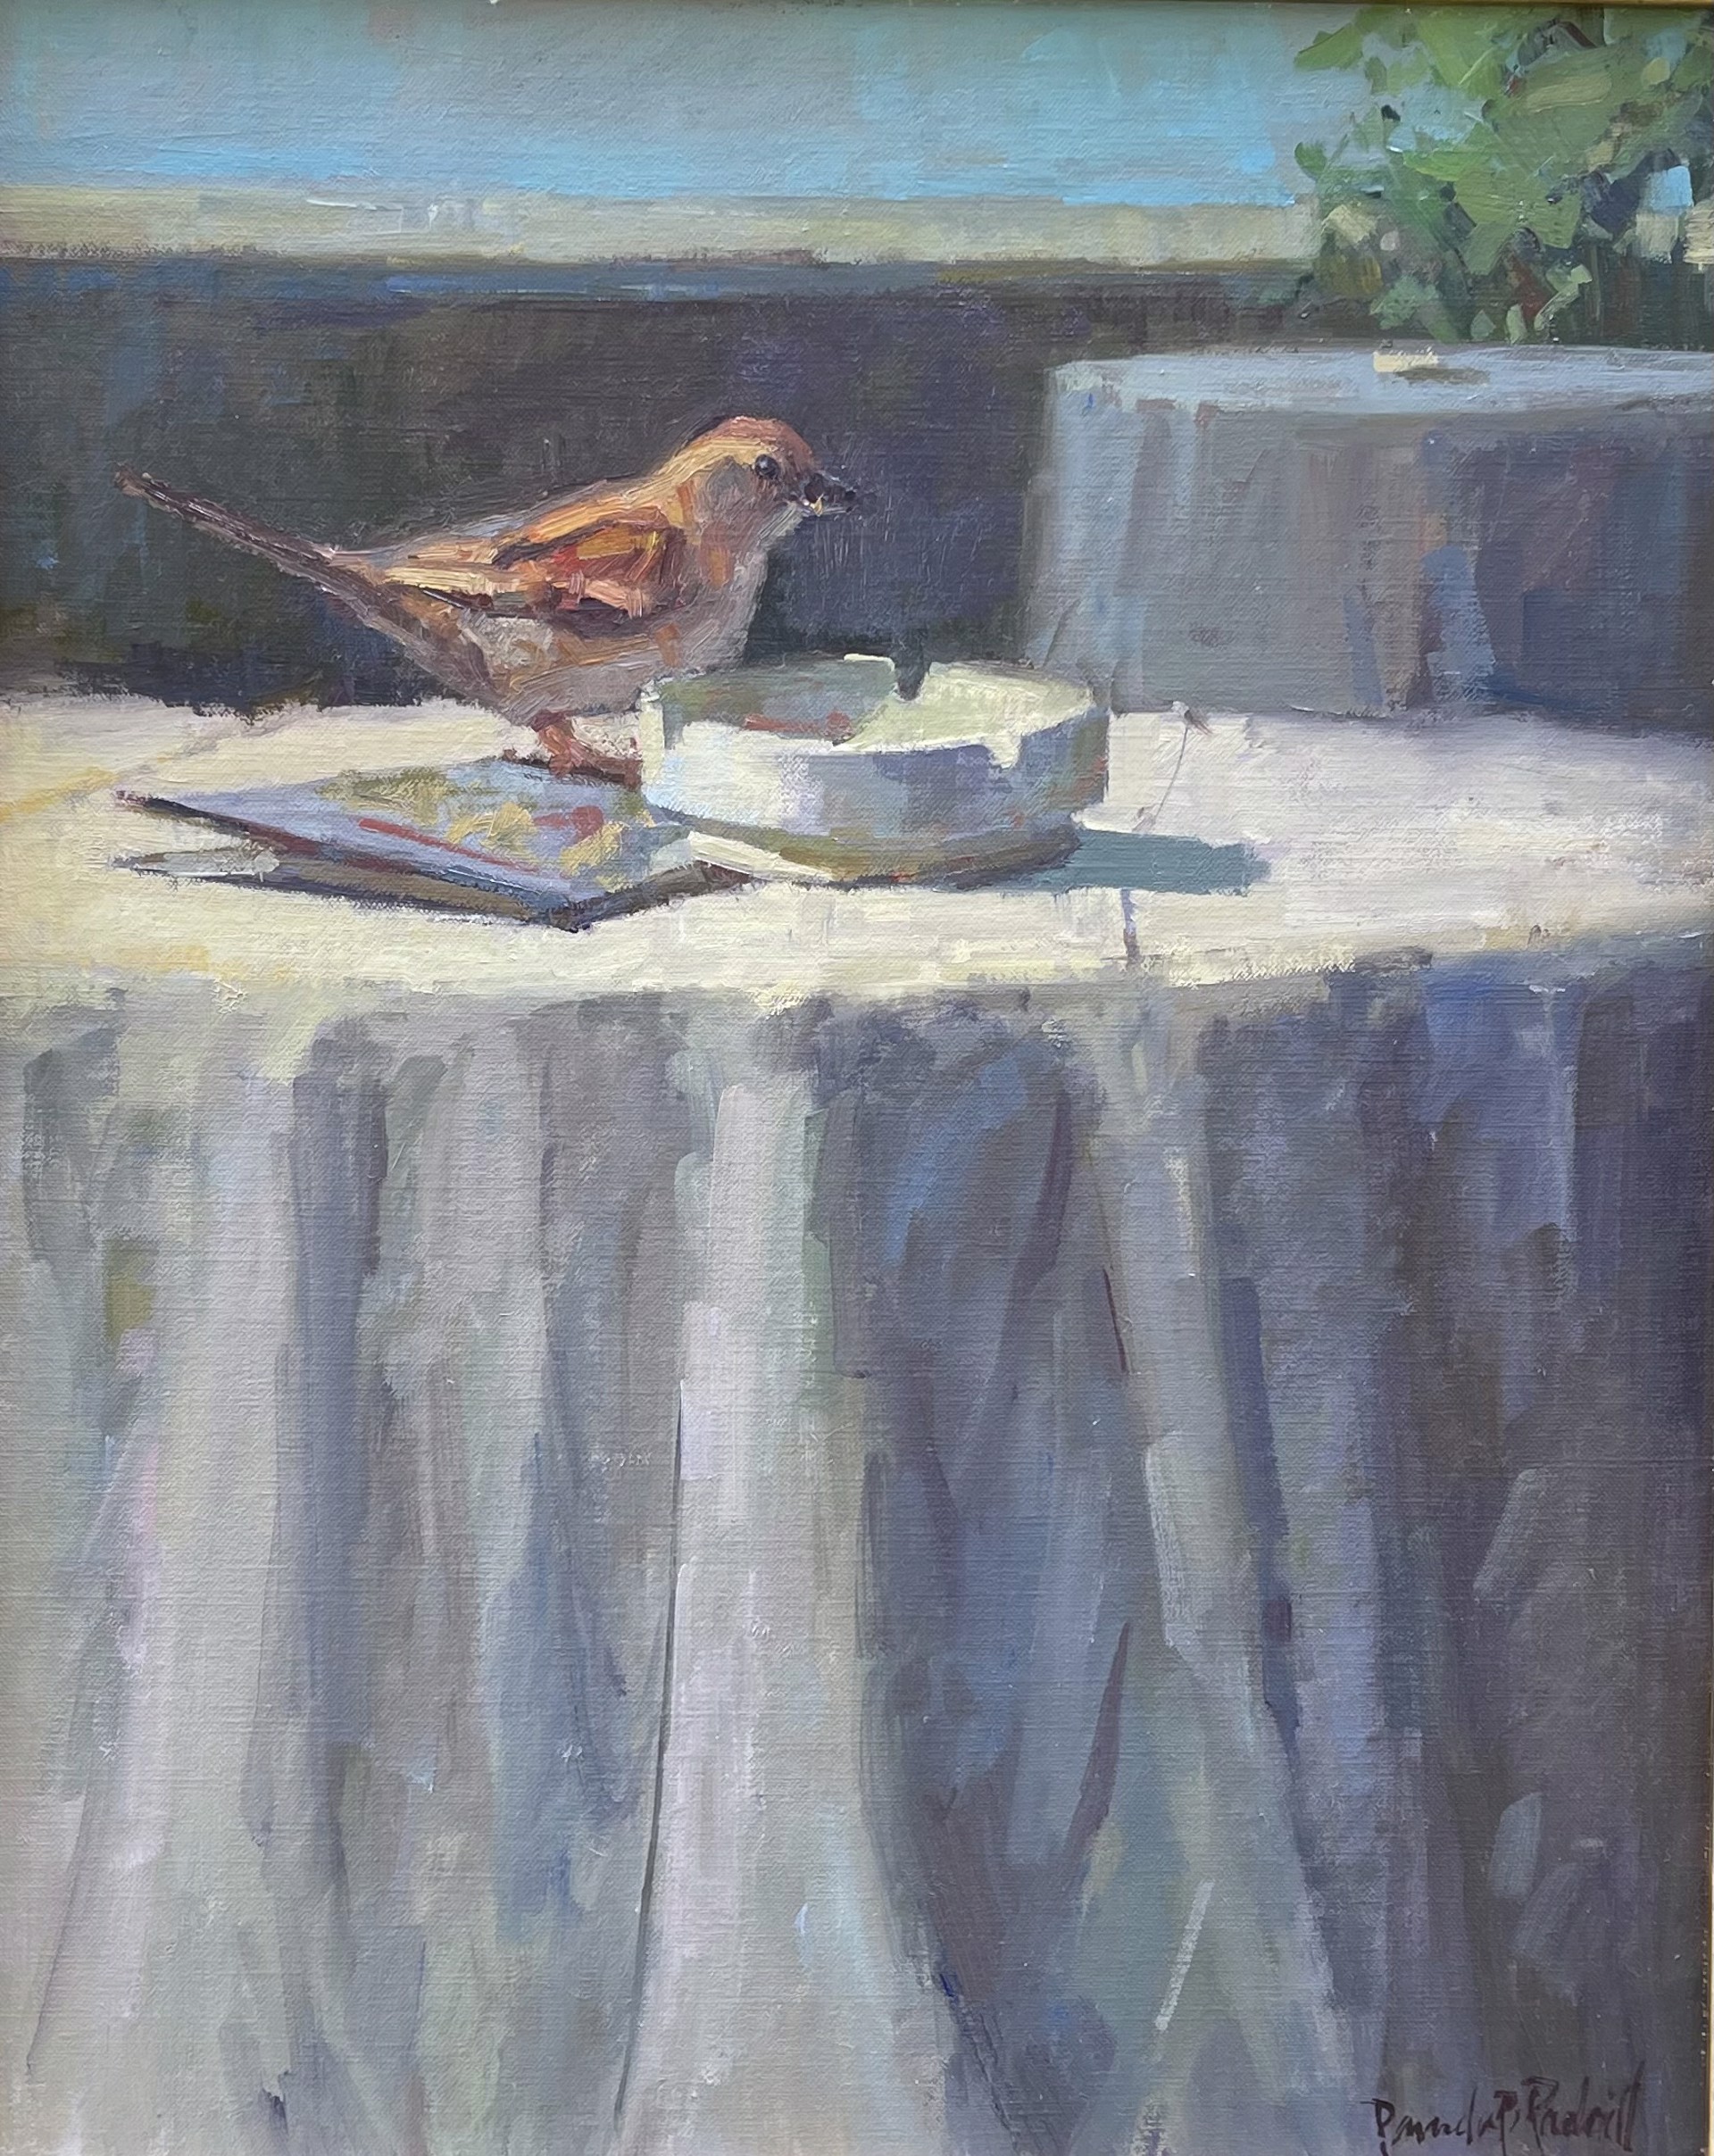 Fine Feathered Fried by Pamela Padgett